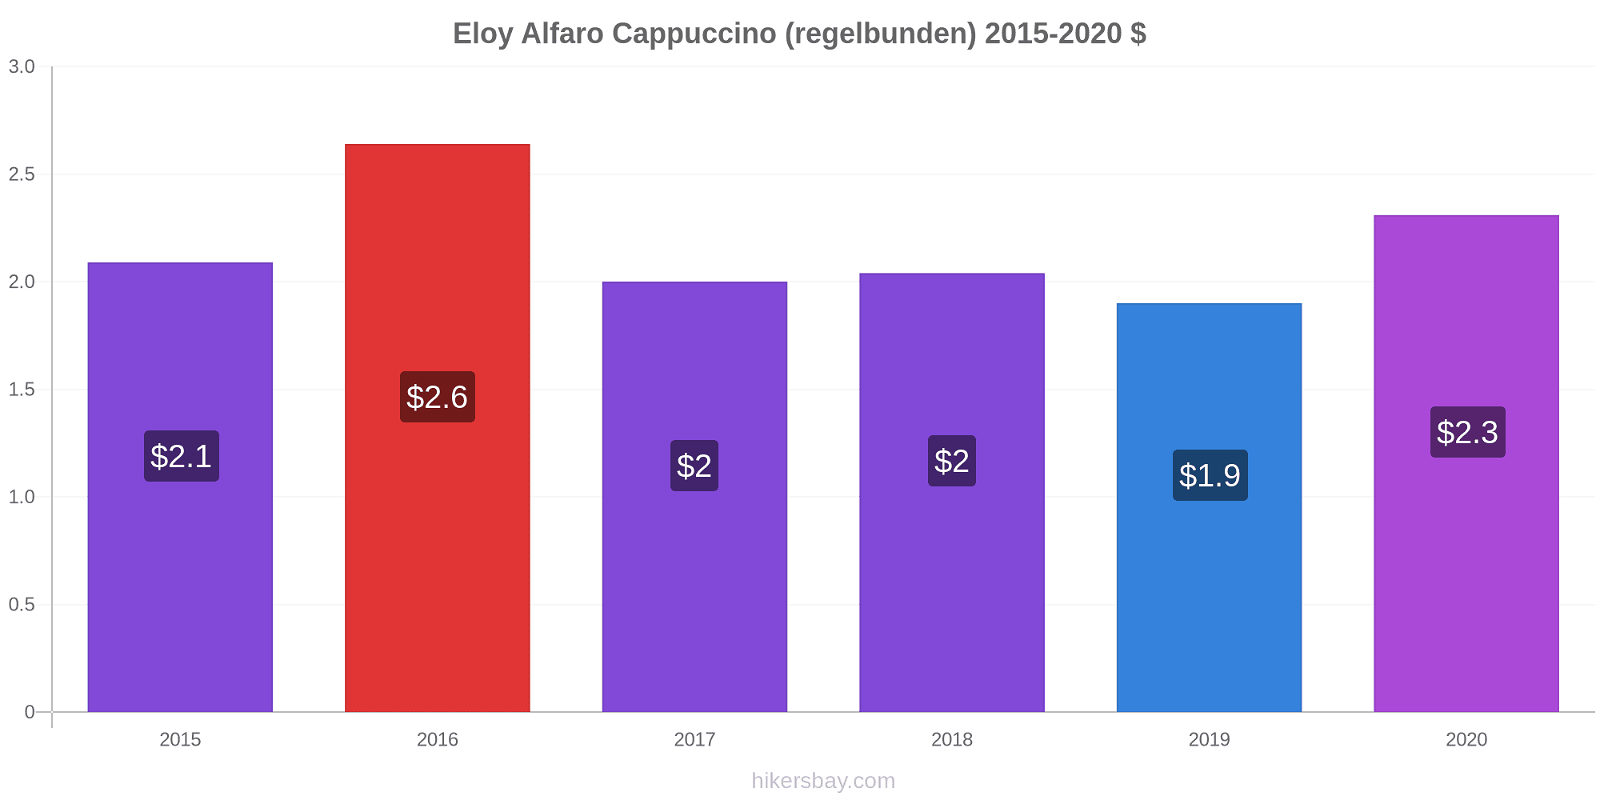 Eloy Alfaro prisförändringar Cappuccino (regelbunden) hikersbay.com